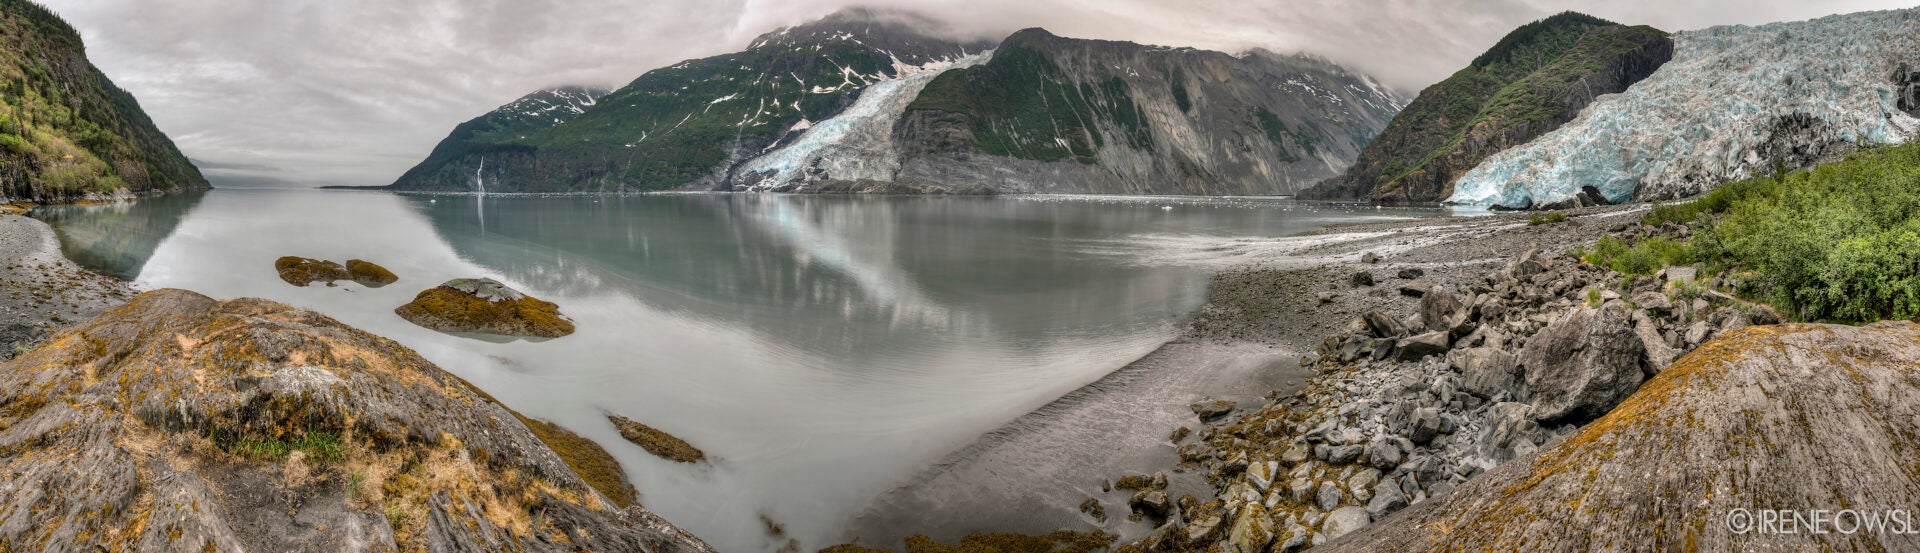 Prince William Sound is Alaska's First Hope Spot